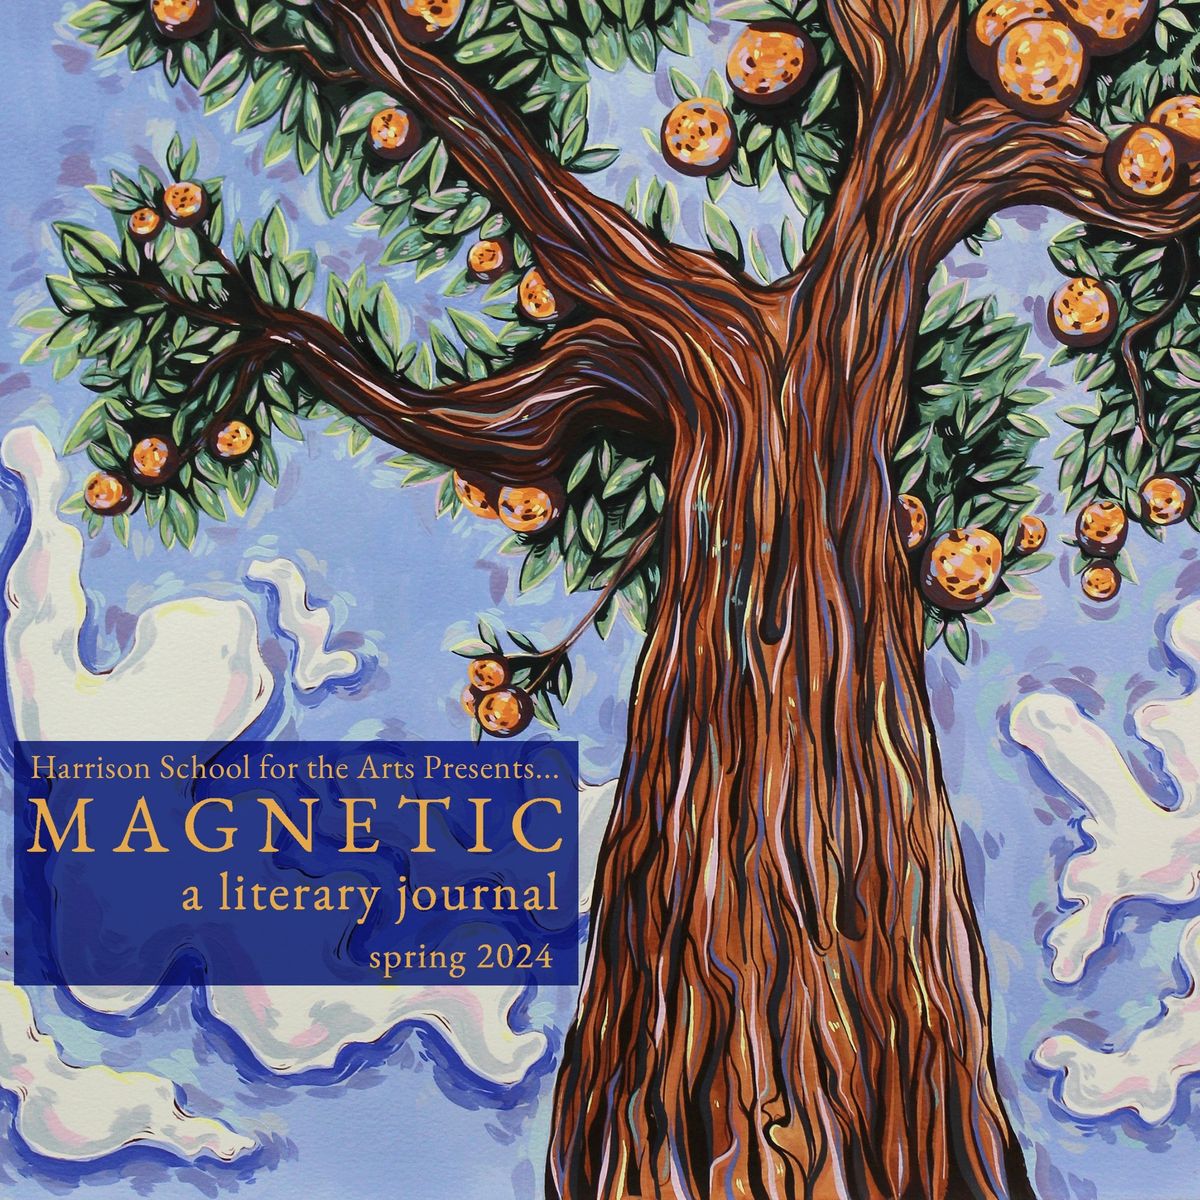 Literary Magazine "Magnetic" Event